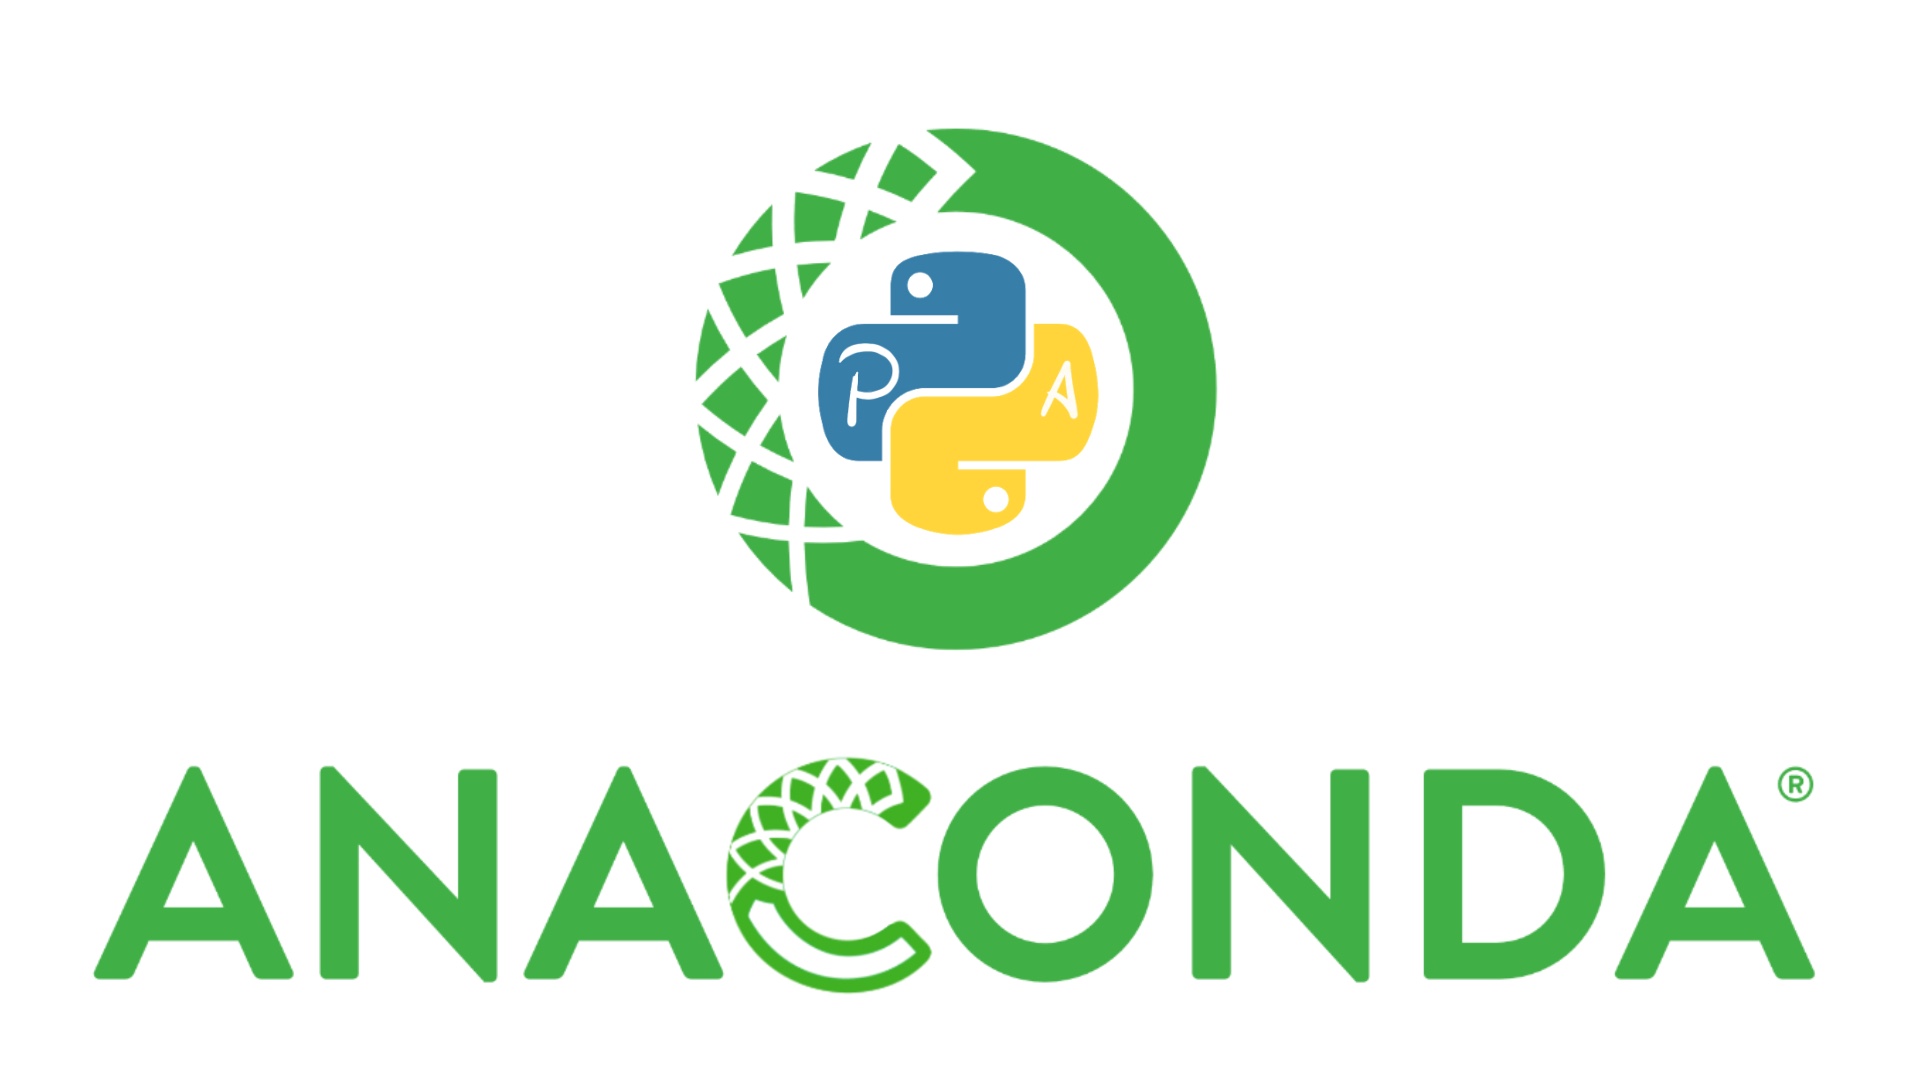 anaconda software python download